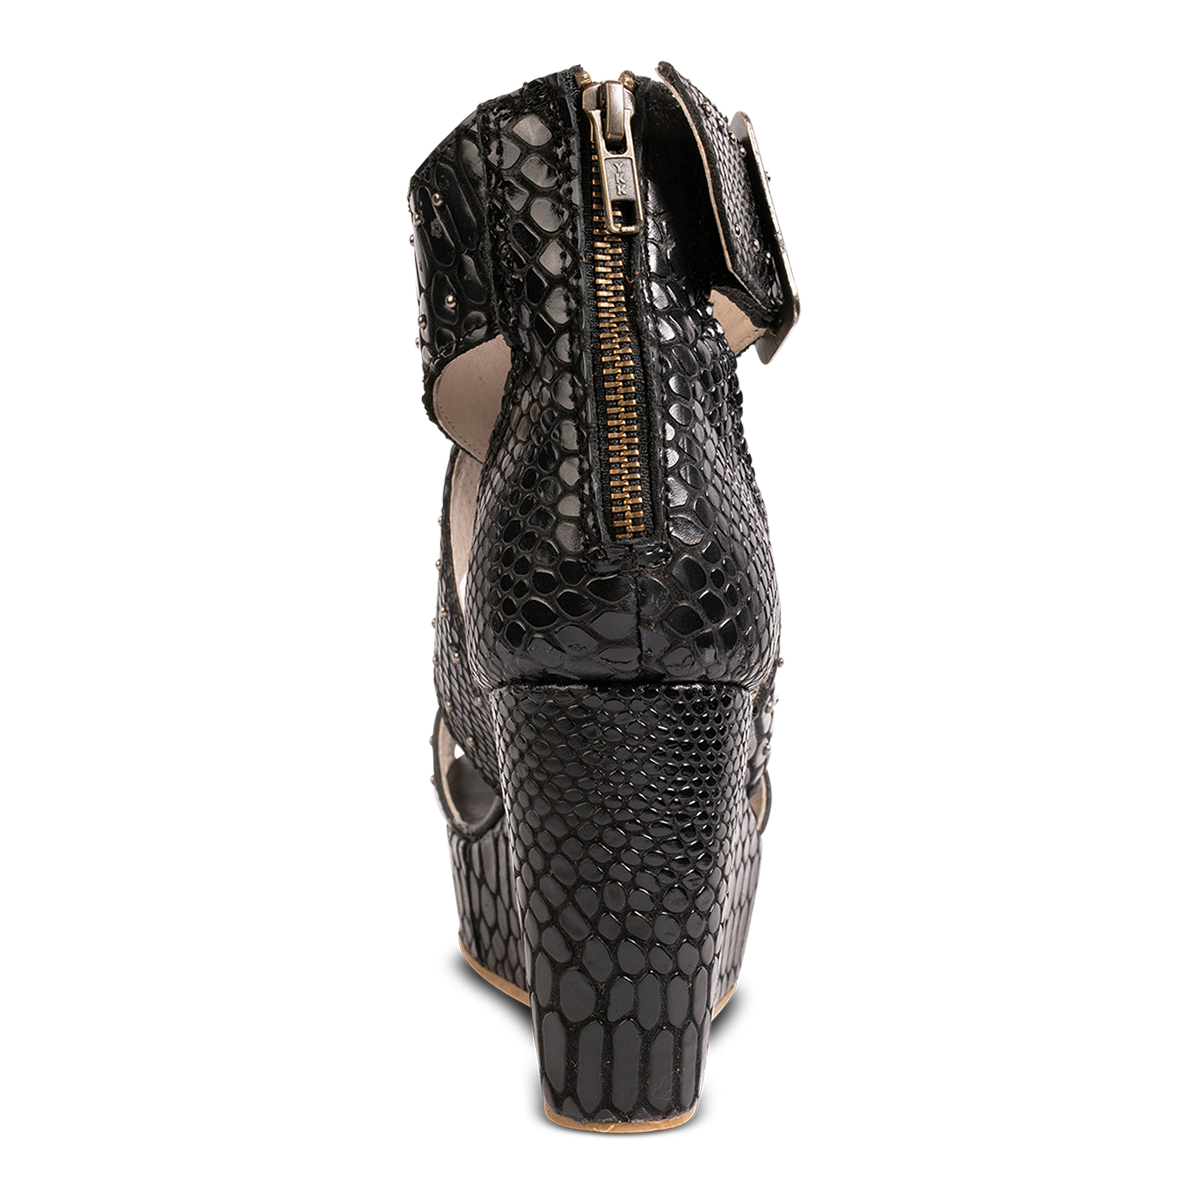 Back view showing wedge heel and zipper closure on FREEBIRD women's Terra black snake platform sandal with stud detailing